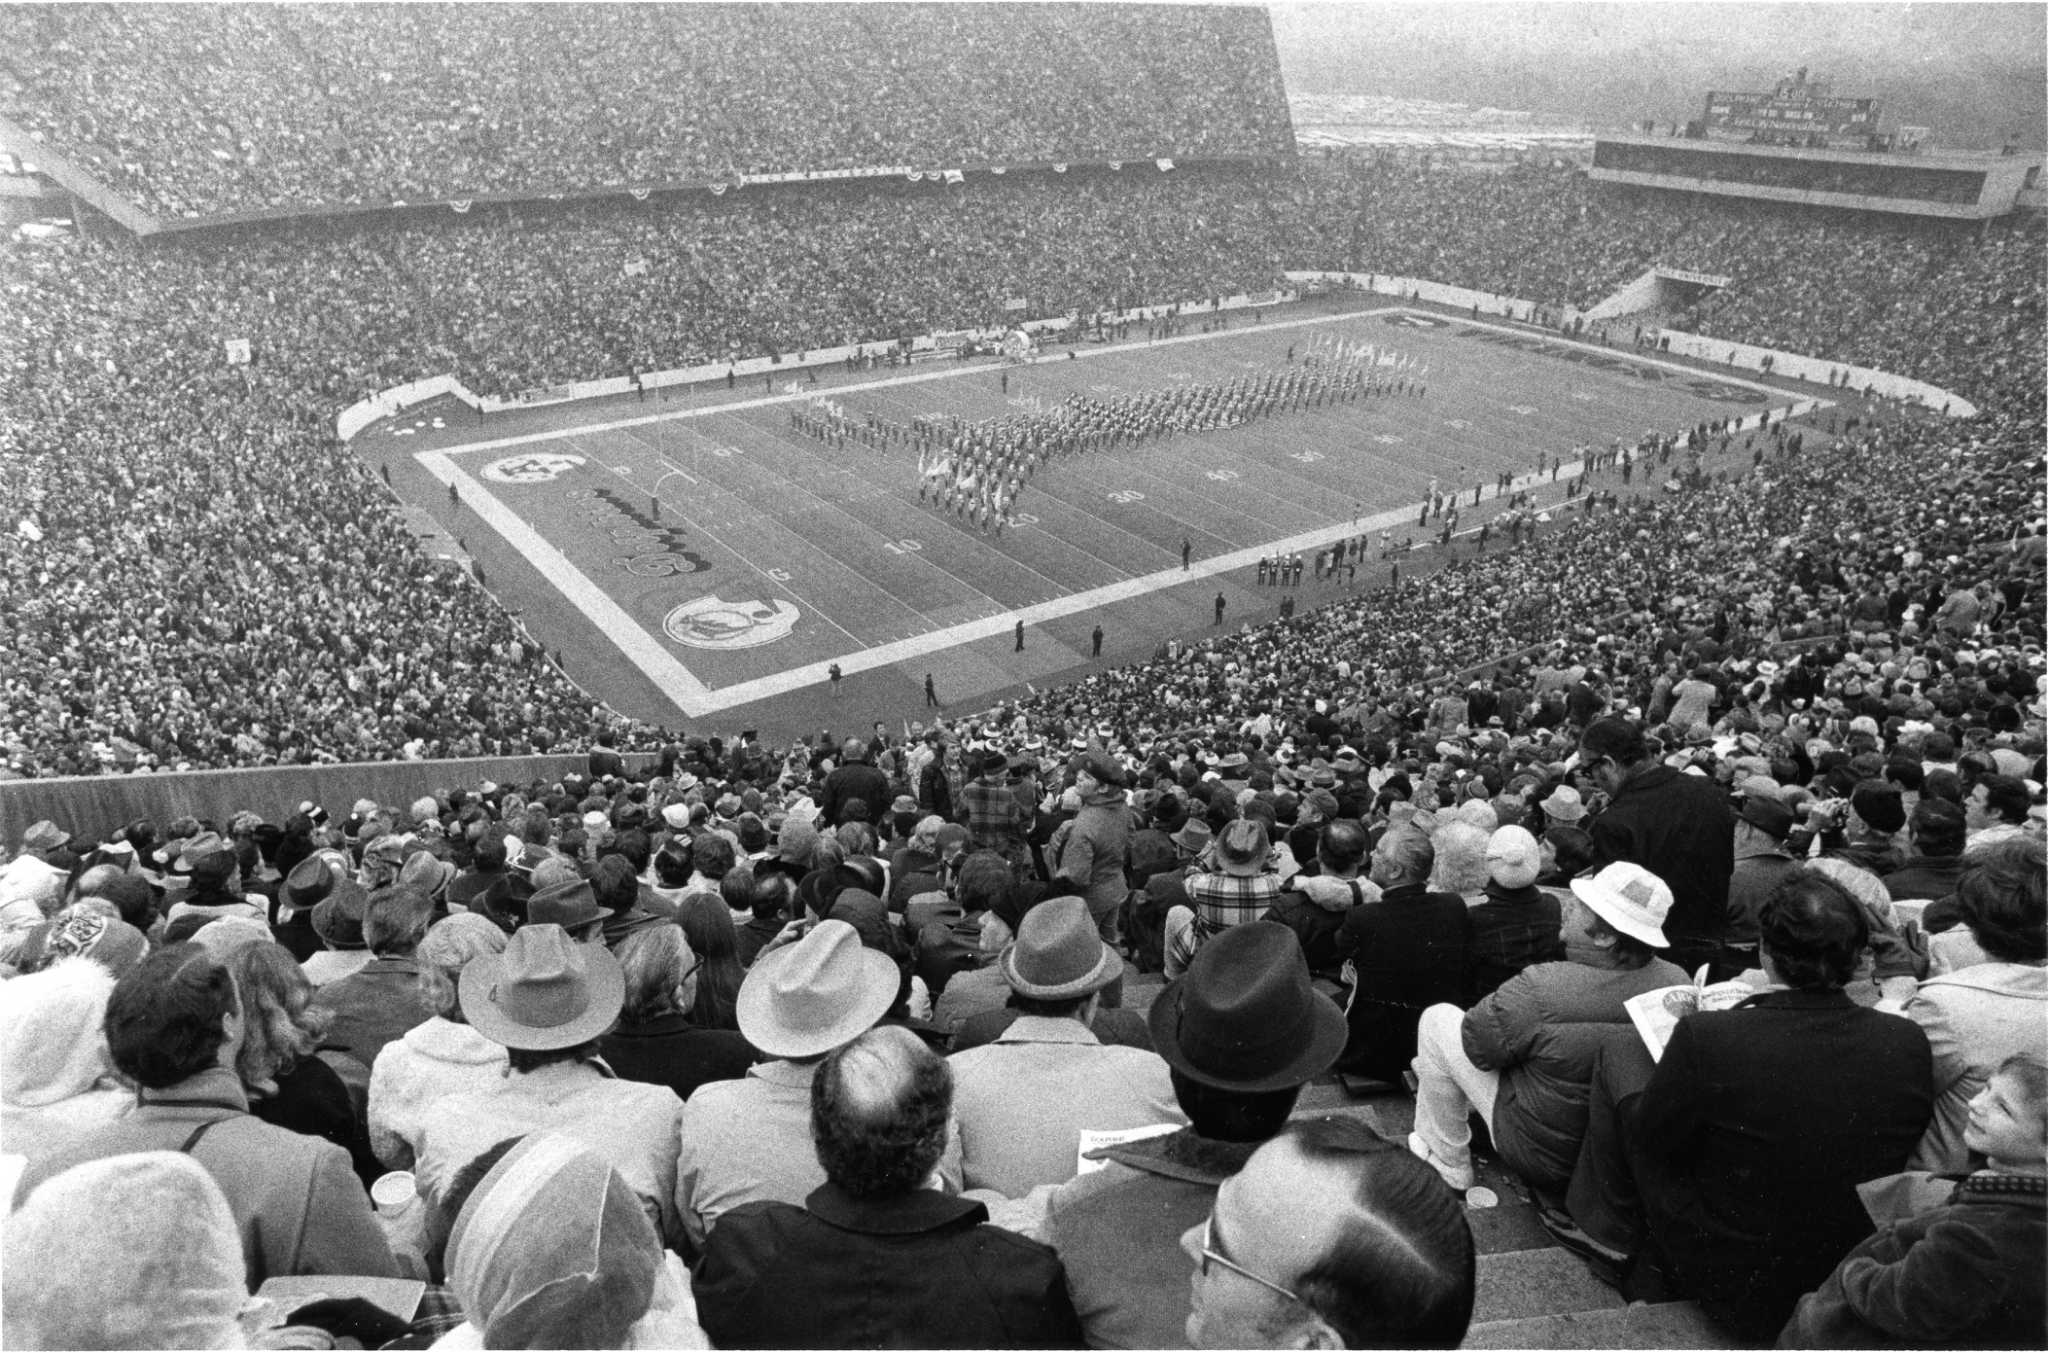 After 70 years, Rice Stadium remains a Houston landmark